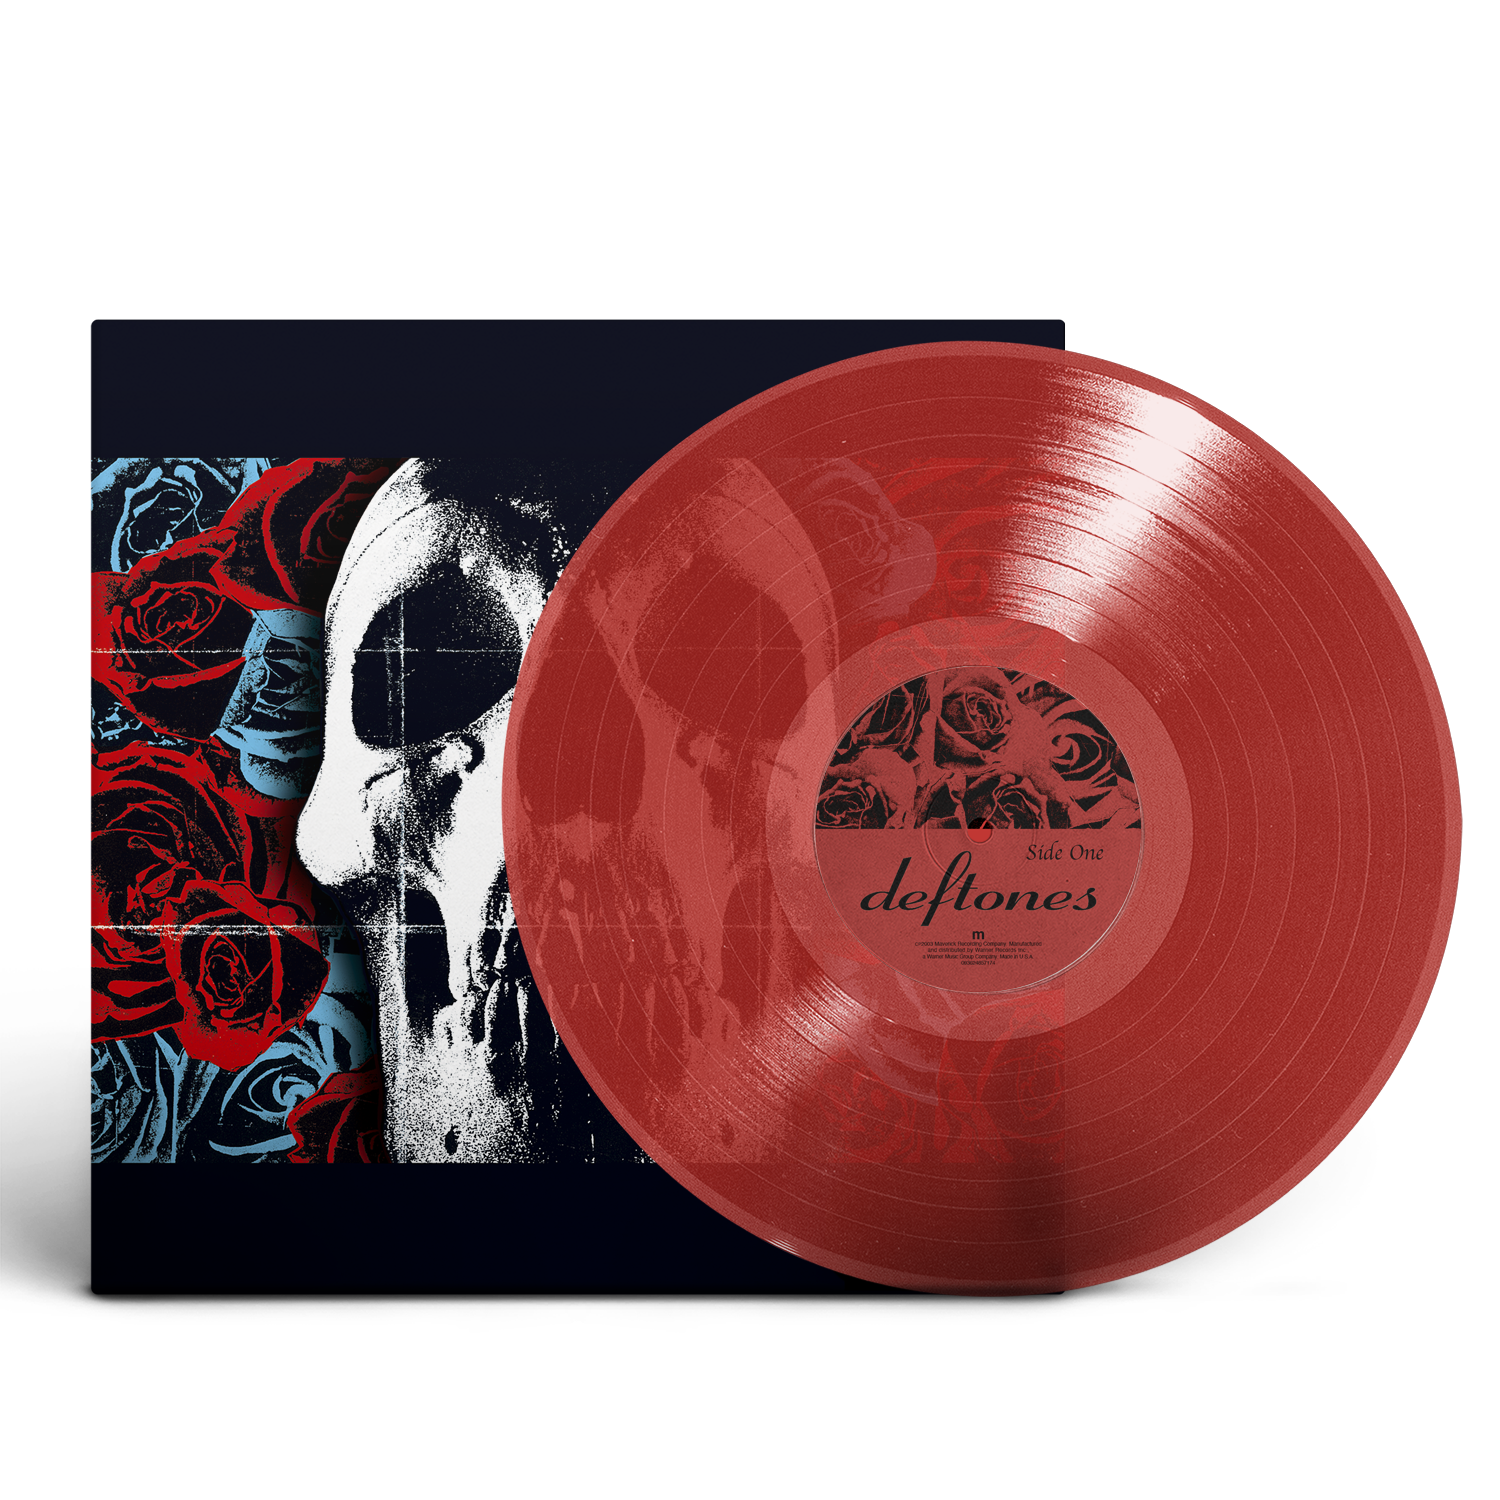 Deftones (20th Anniversary) Limited Ruby Red Vinyl LP